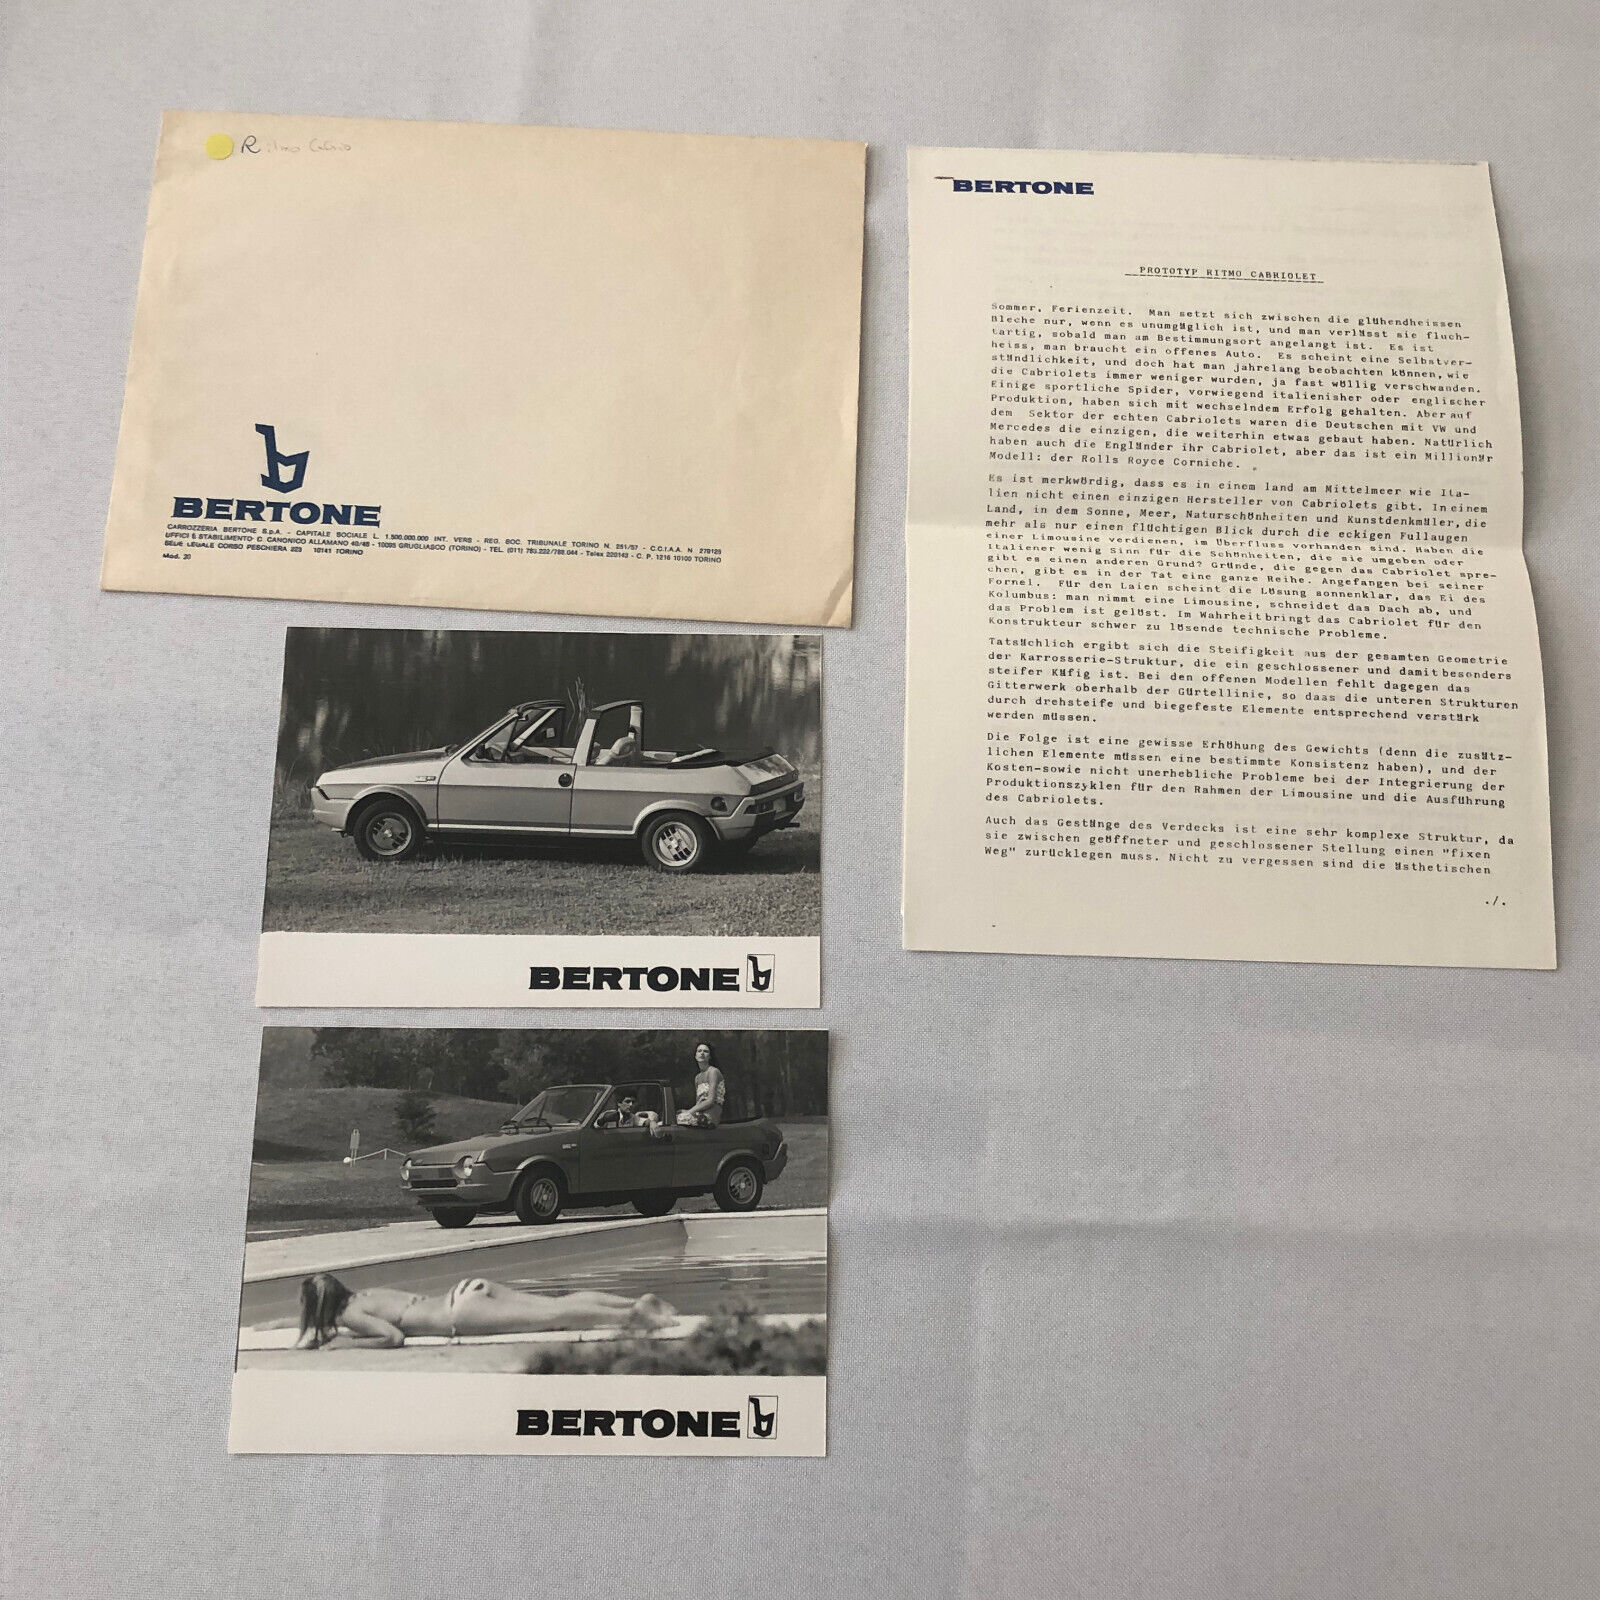 Bertone Ritmo Cabriolet Convertible Press Kit with Photographs Photos Fiat Ritmo